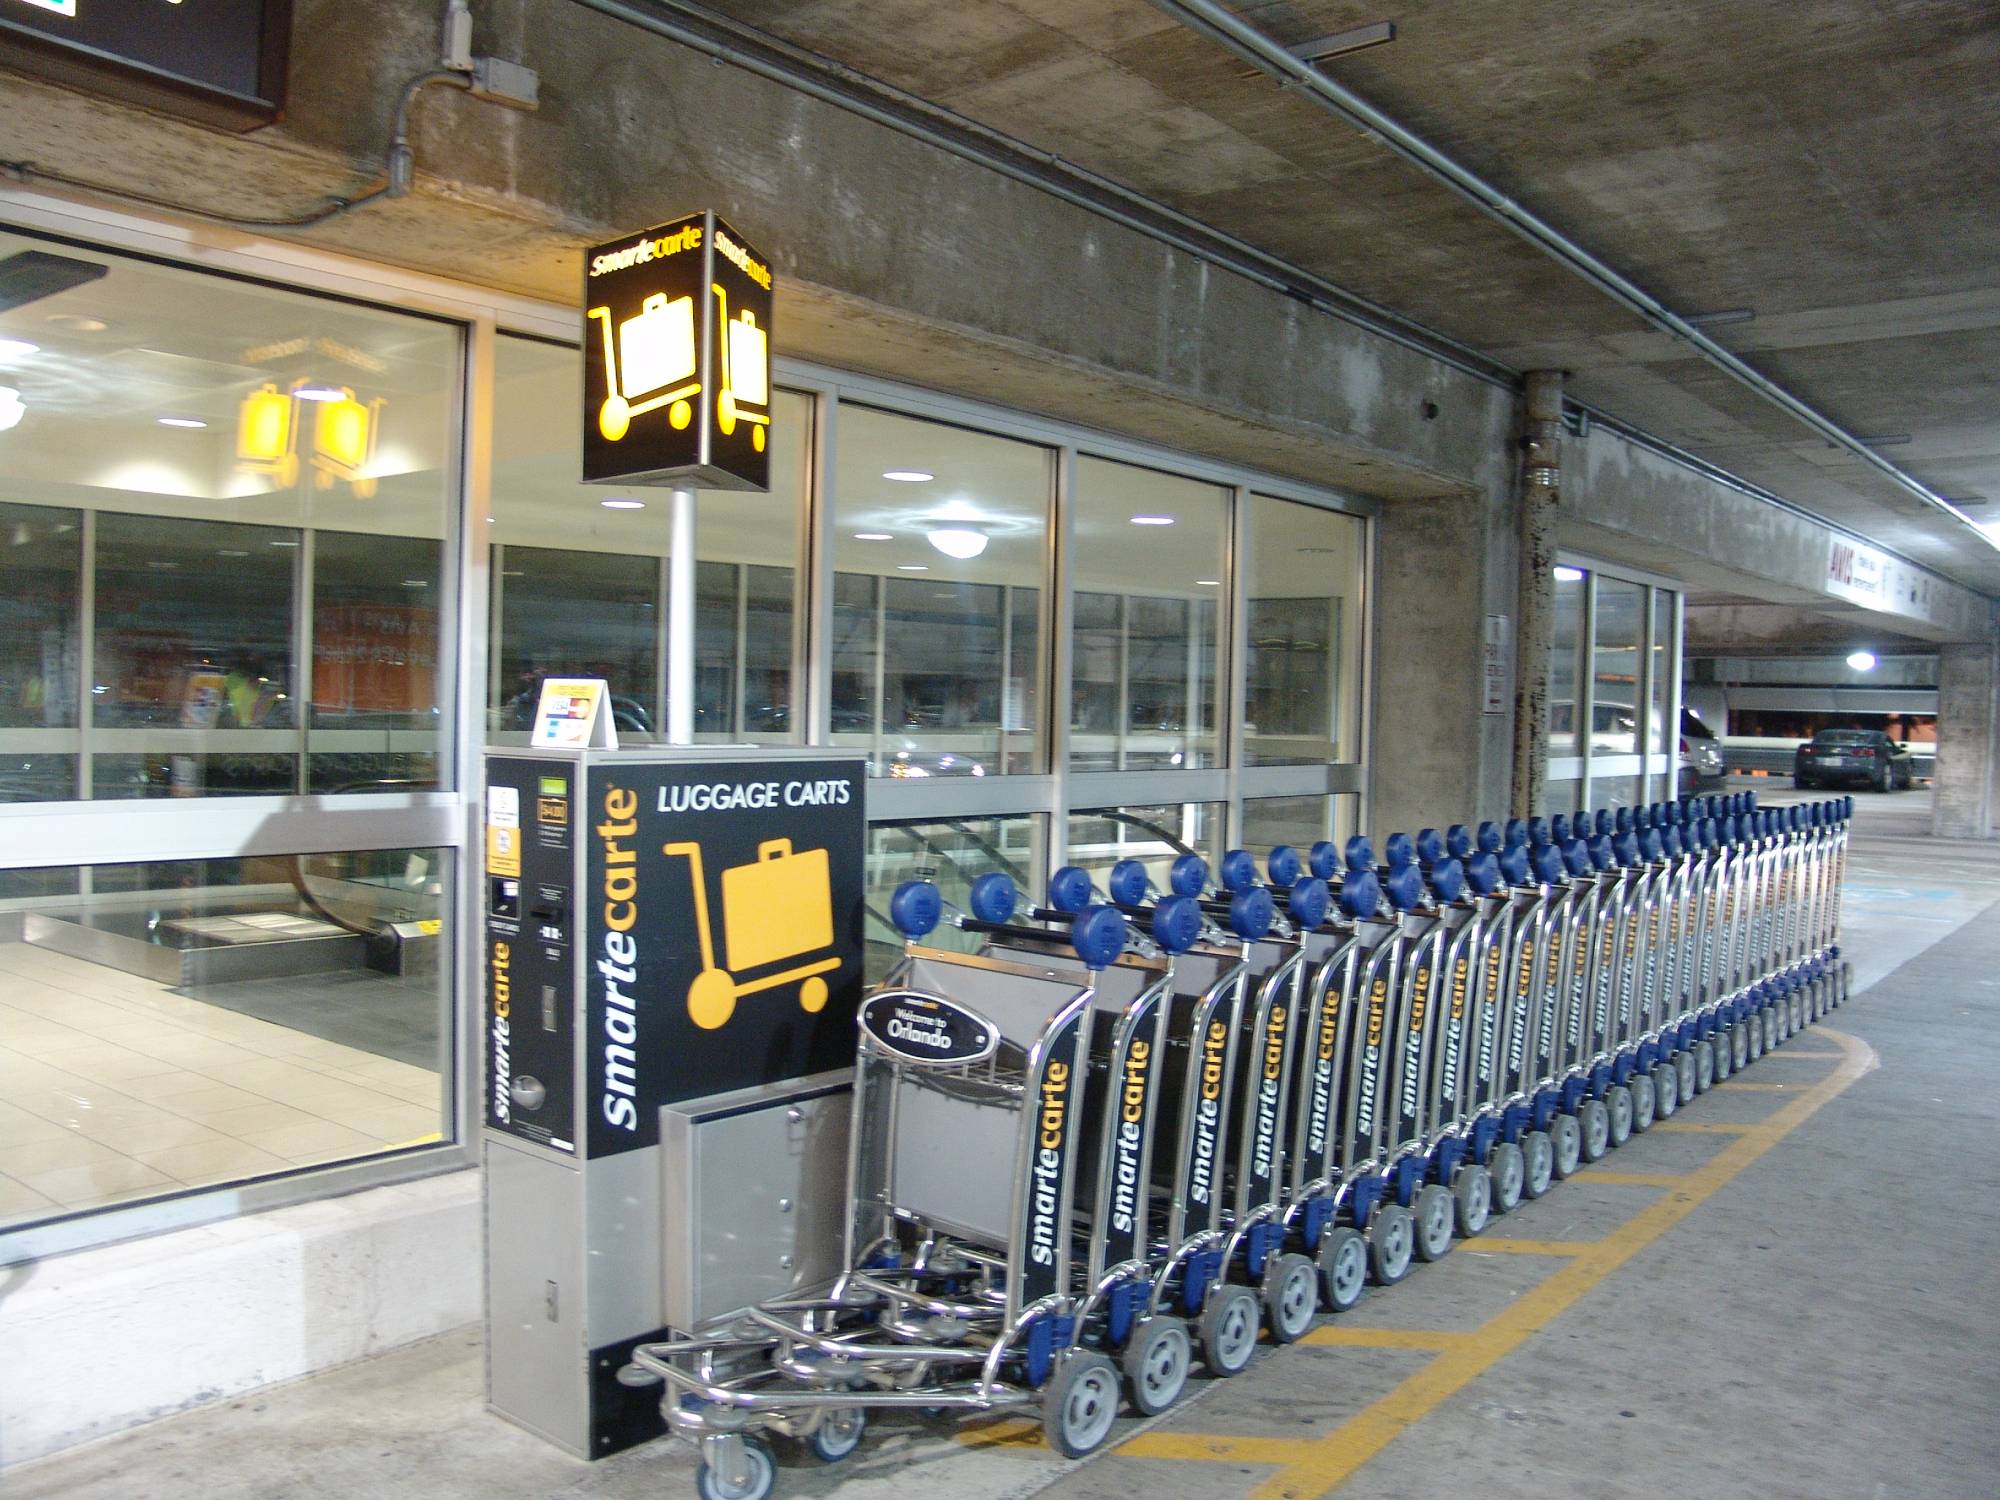 Orlando International Airport - luggage carts